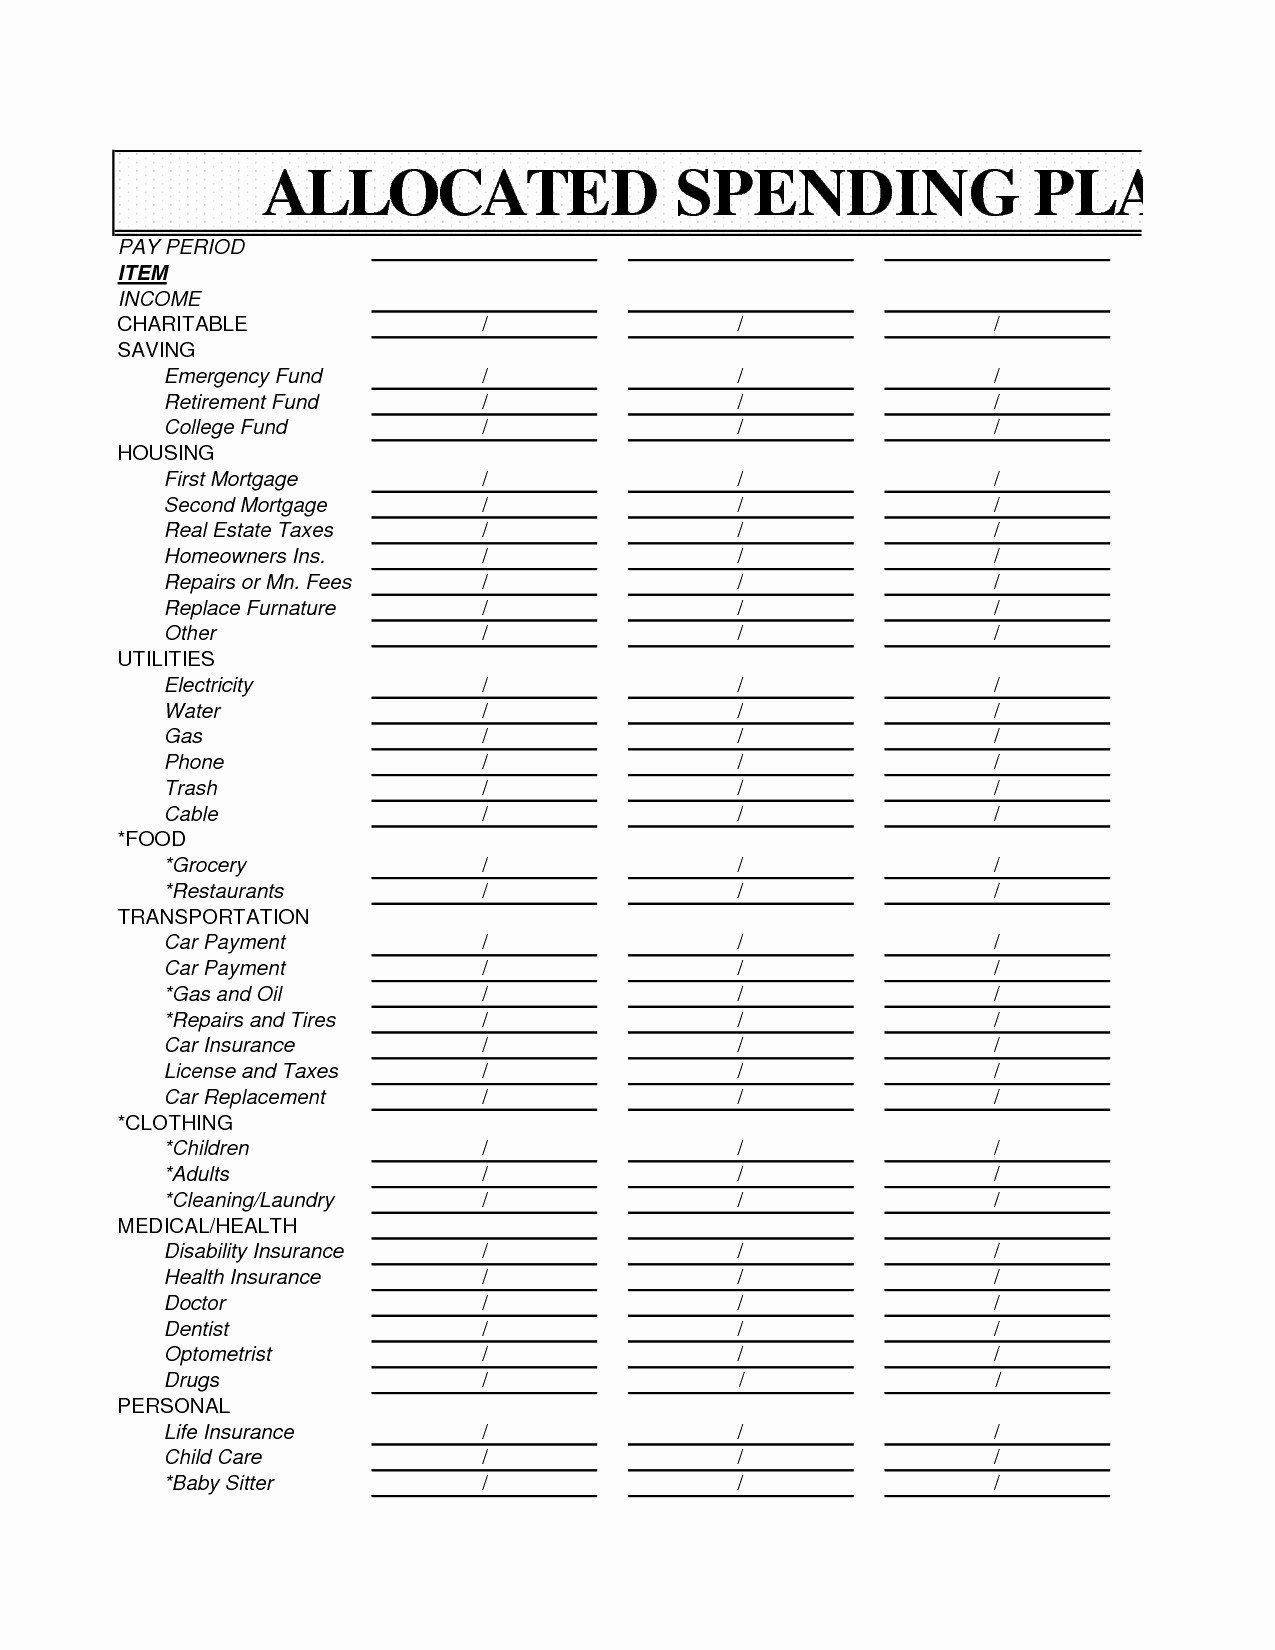 Allocated Spending Plan Form New Vfix365 Document